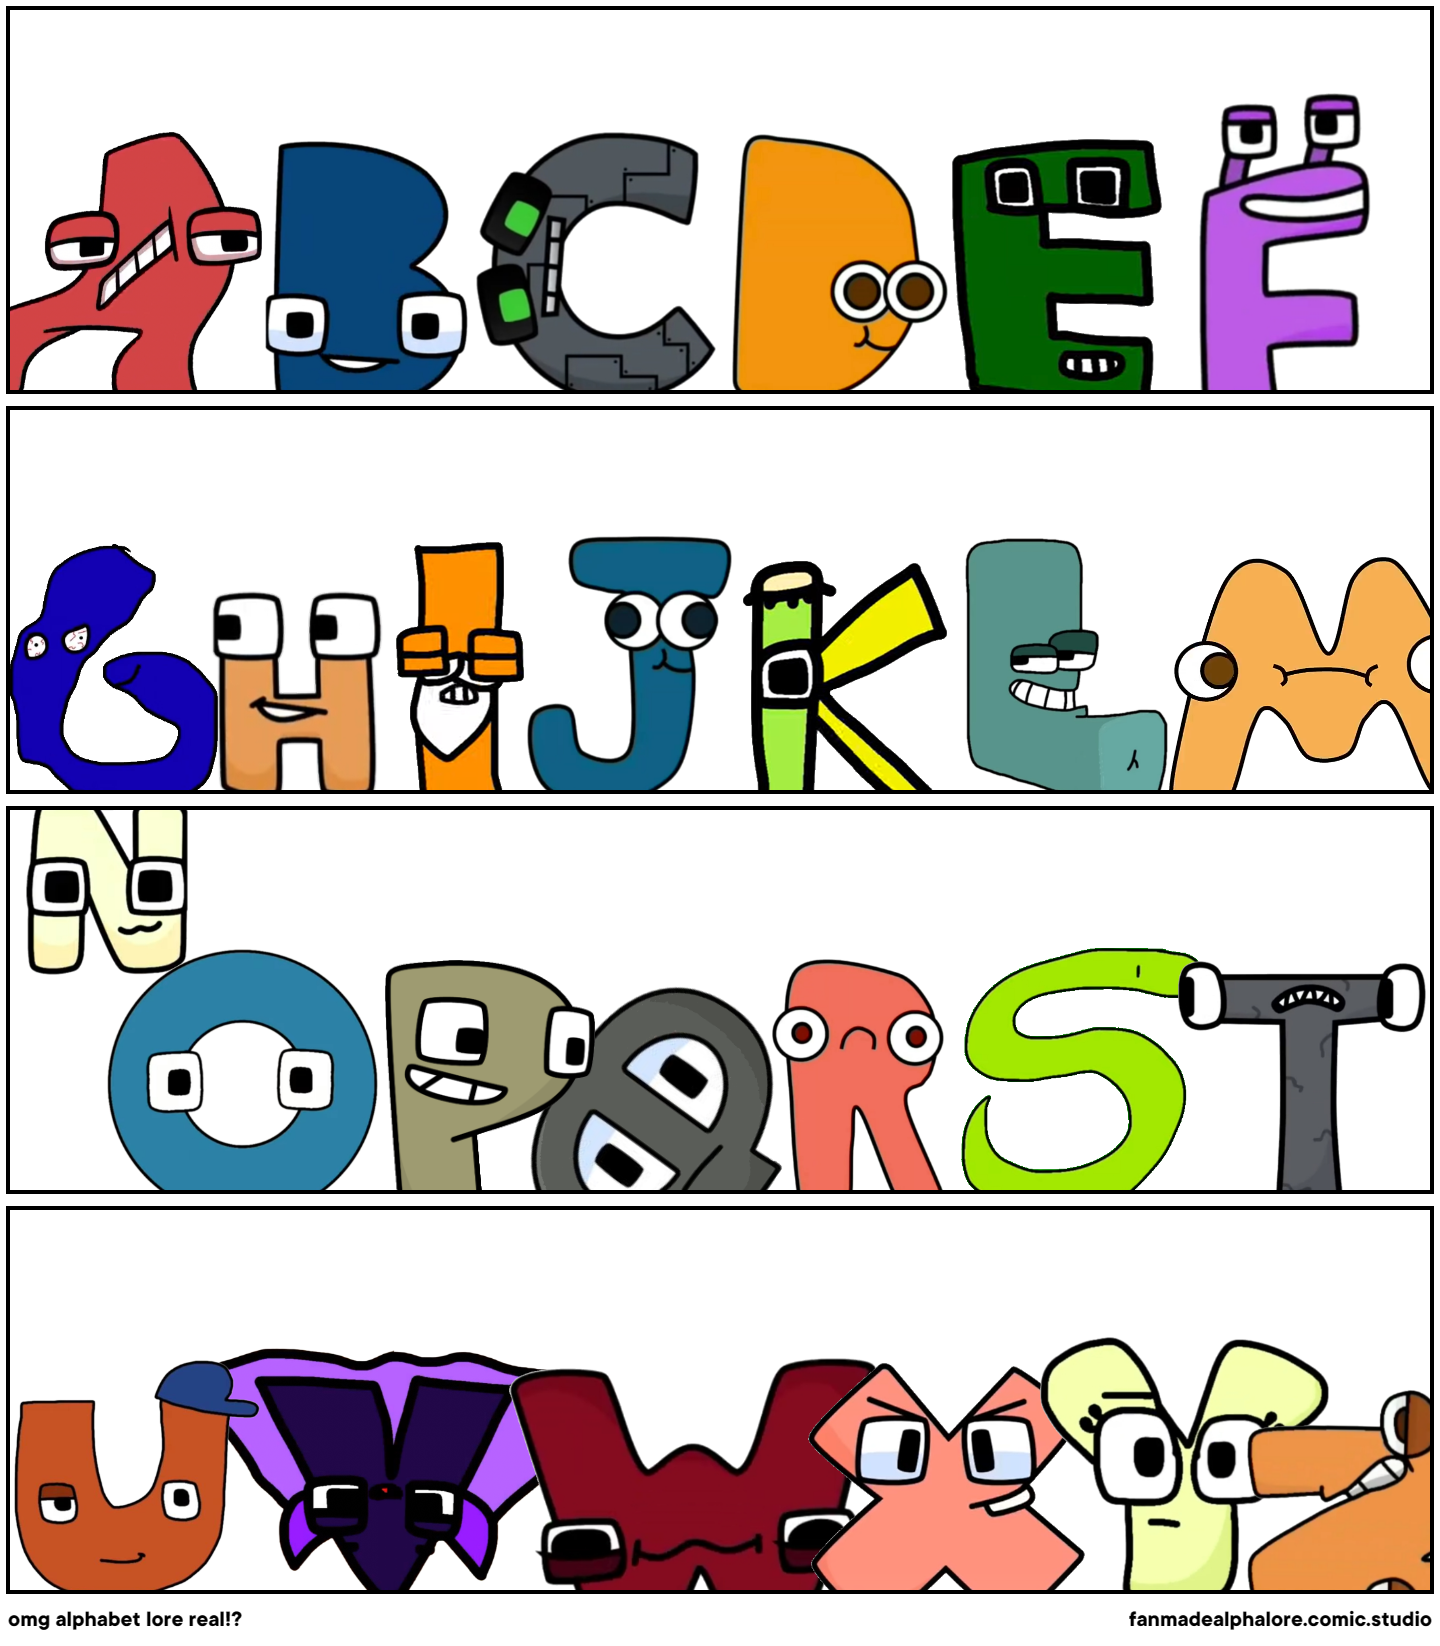 omg alphabet lore real!? - Comic Studio